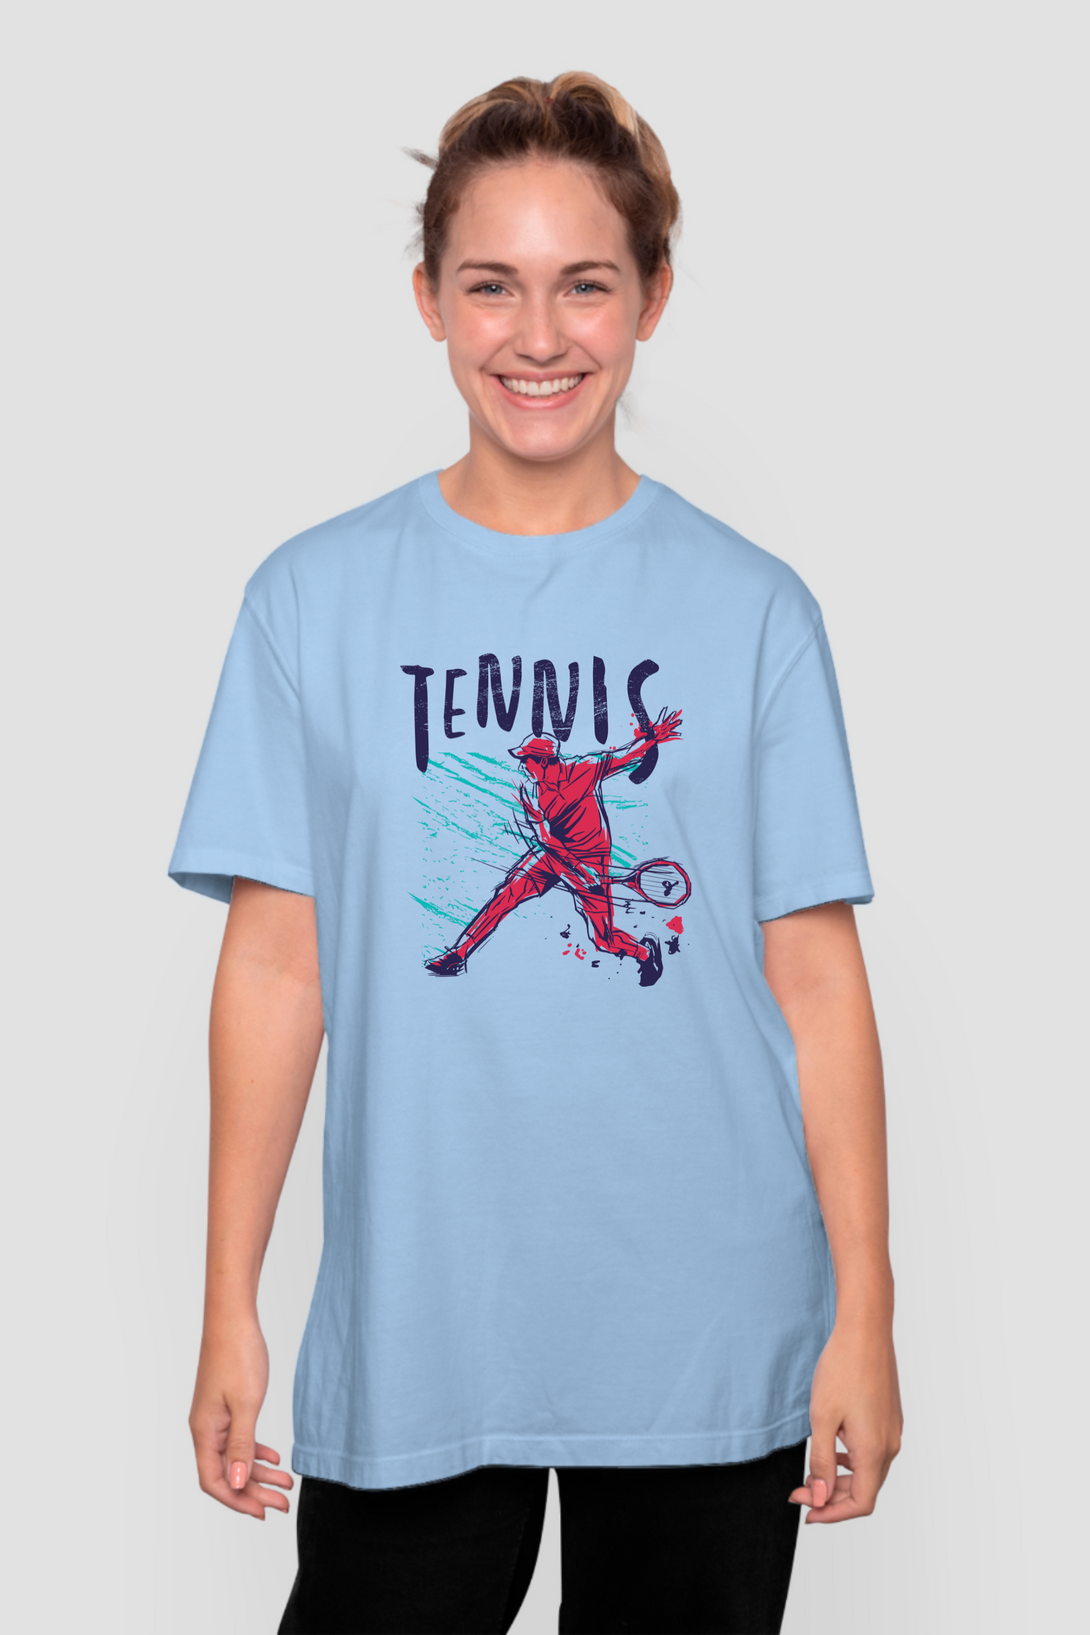 Tennis Printed Oversized T-Shirt For Women - WowWaves - 8